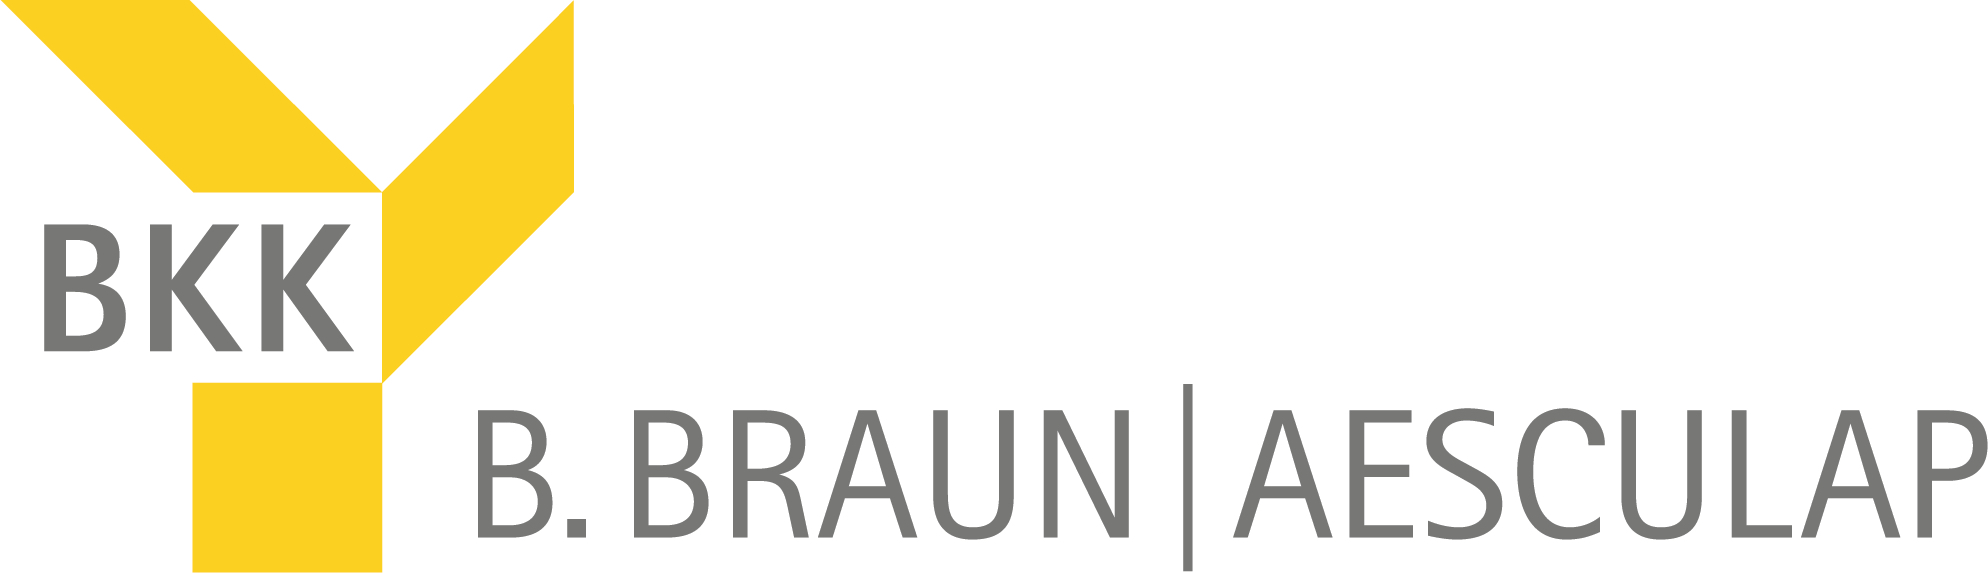 bkk bbraun-aesculap-logo bunt